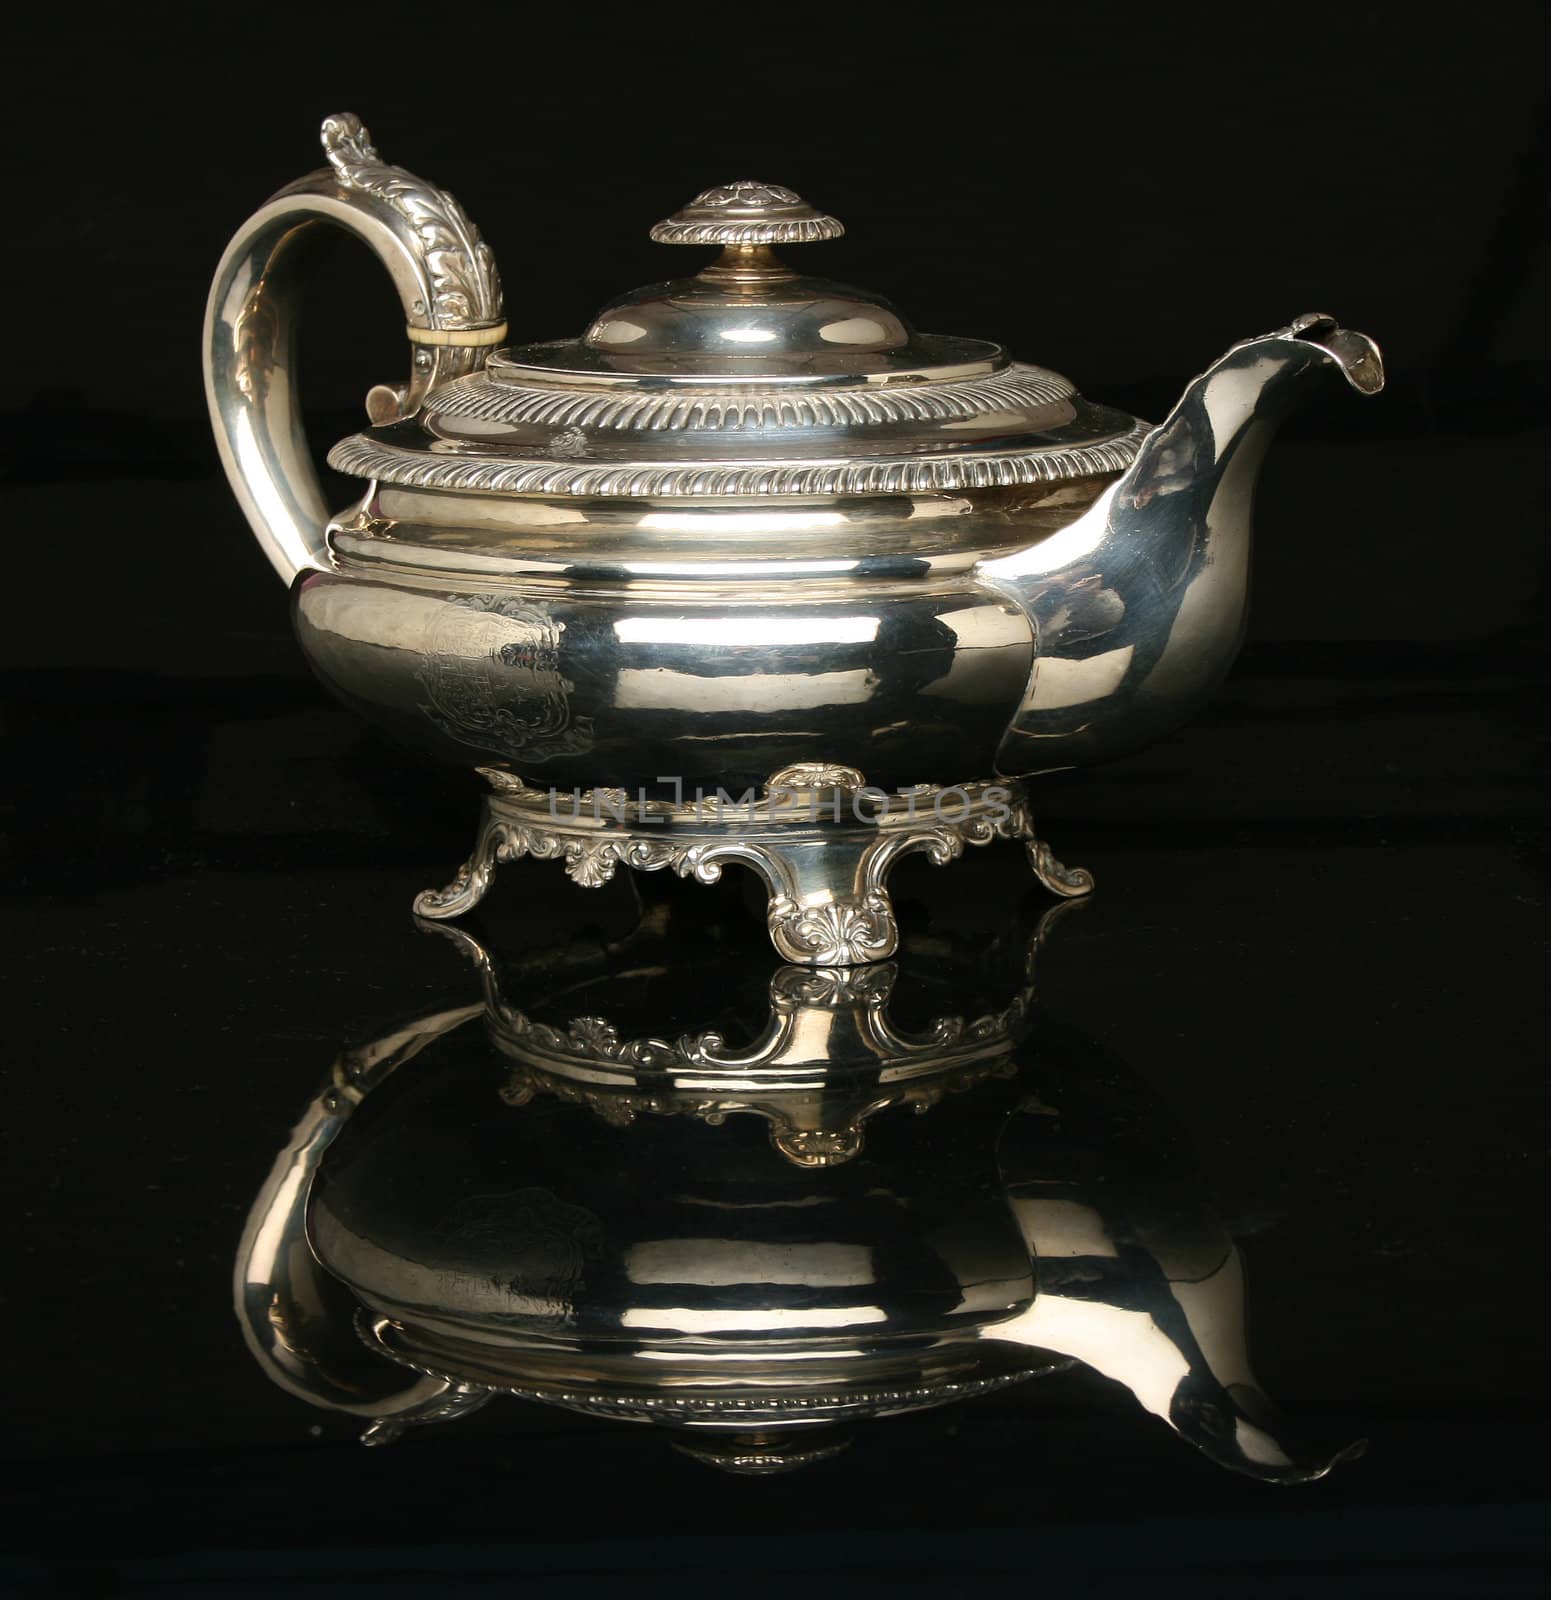 Beautiful silver teapot by Erdosain